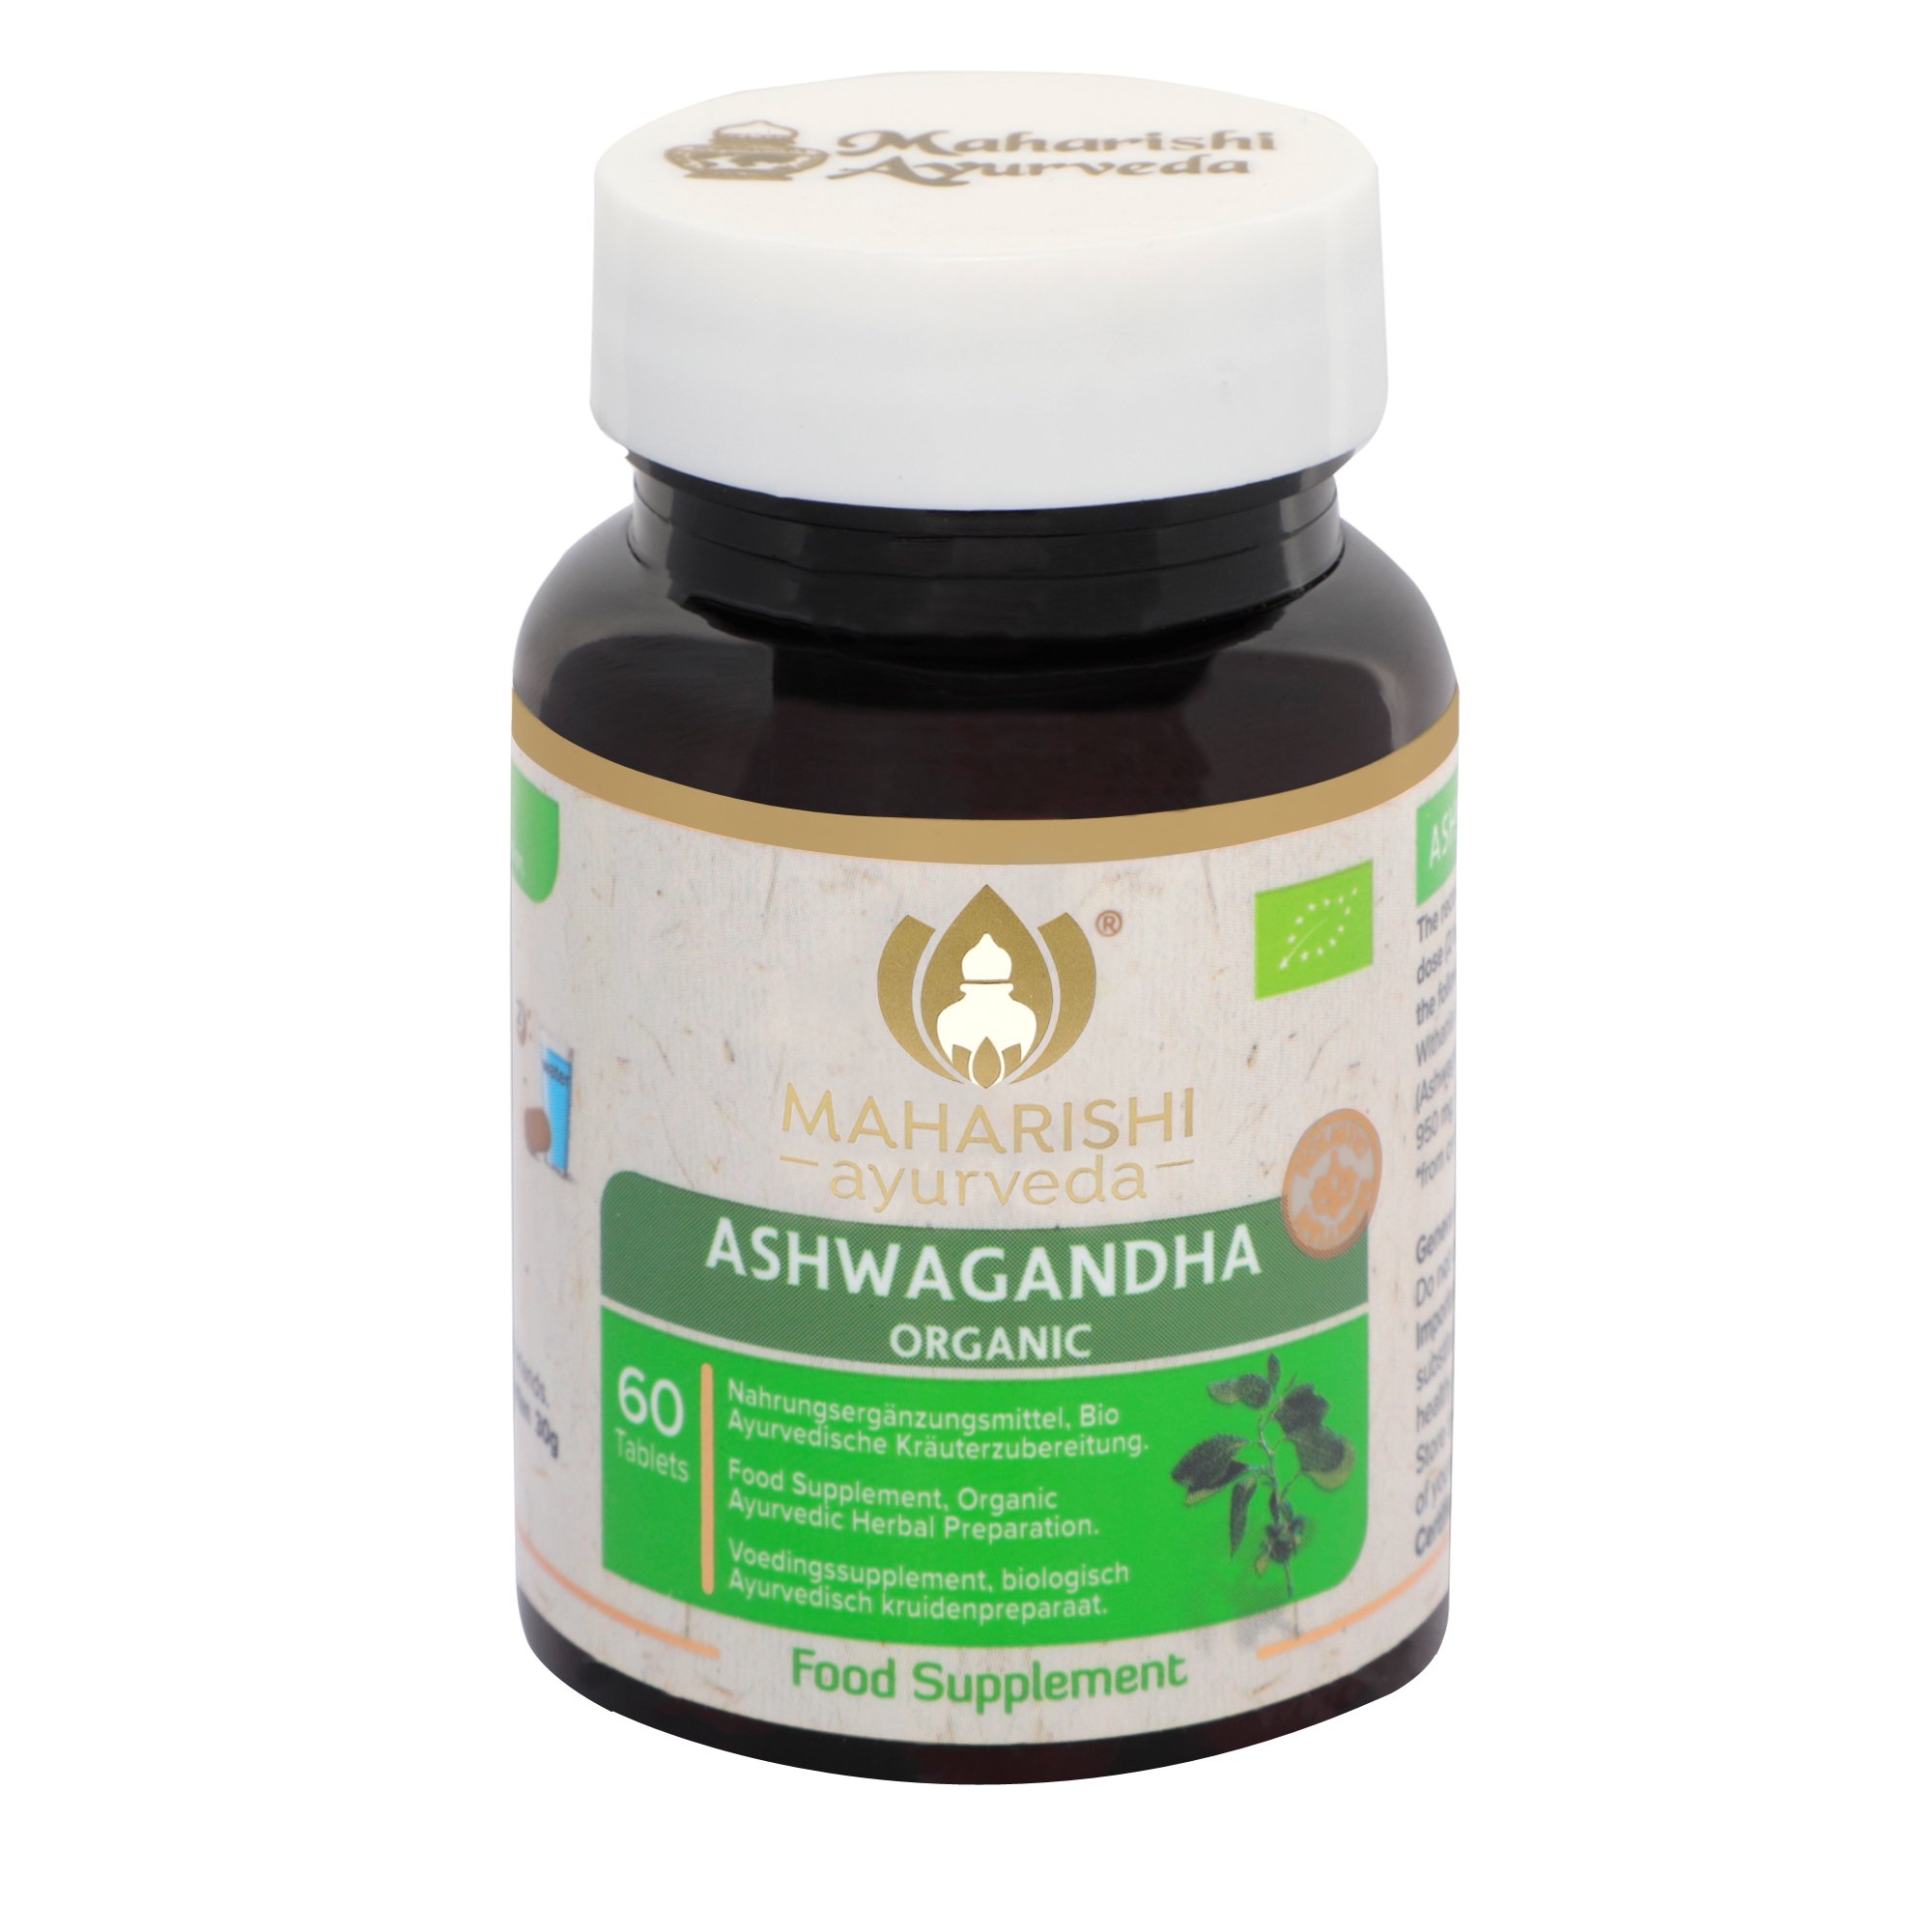 Купить Ашваганда Махариши Organic Ashwagandha Maharishi 60 таб